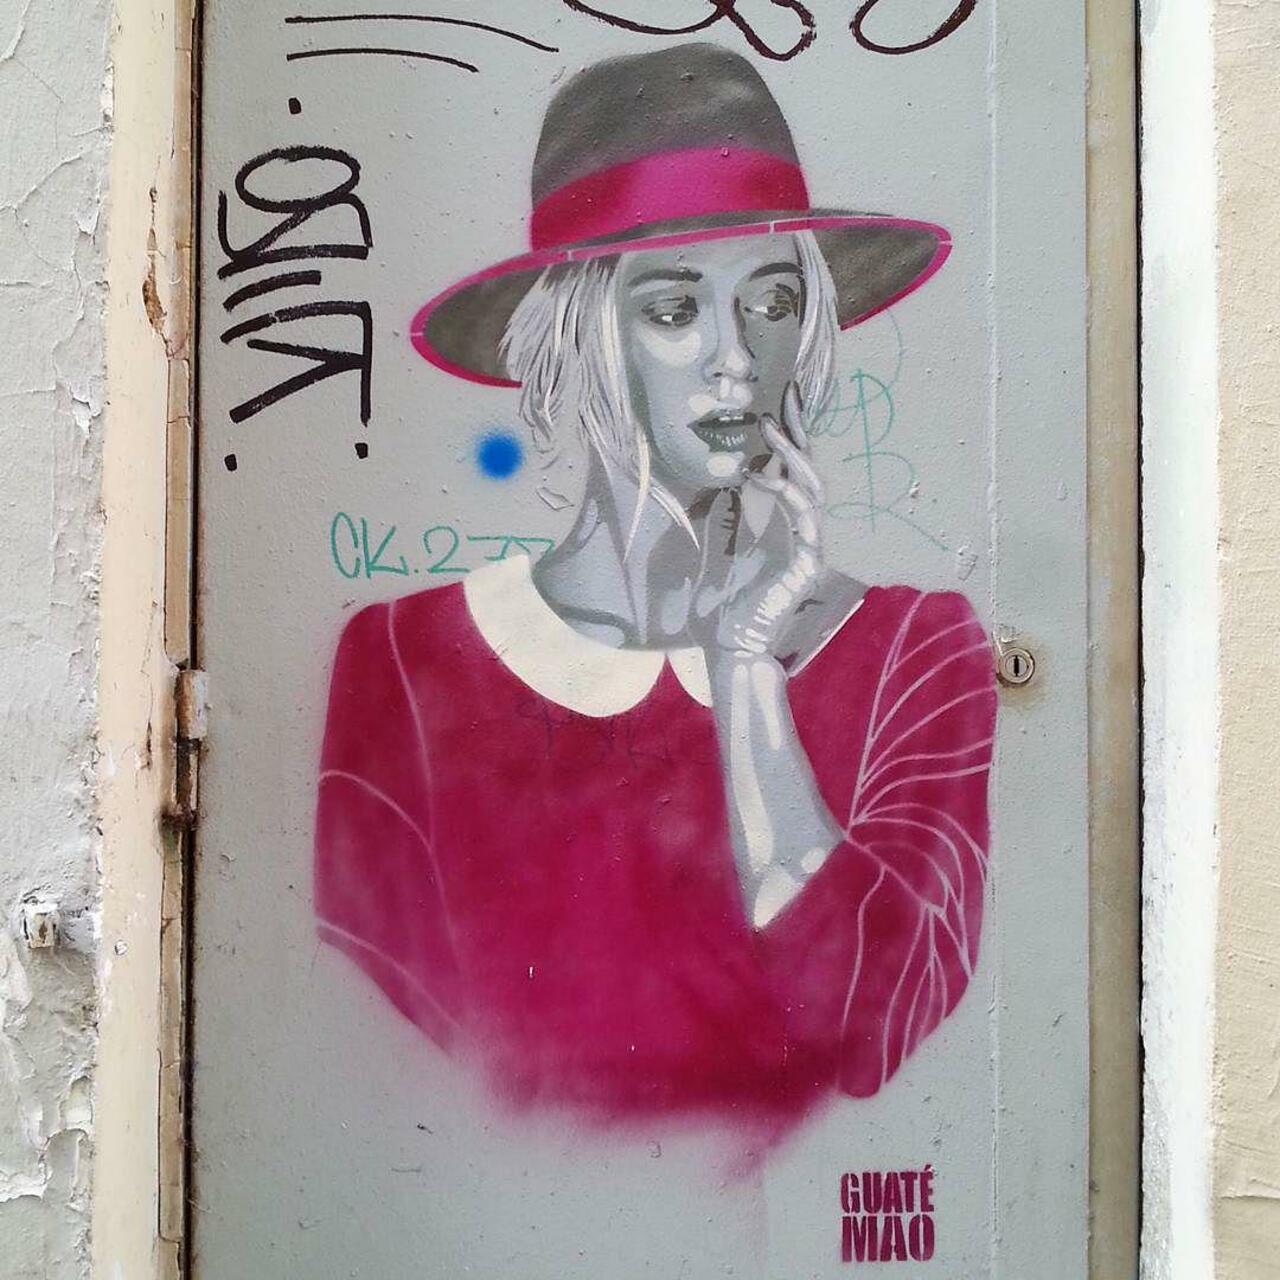 #Paris #graffiti photo by @fotoflaneuse http://ift.tt/1G2bFXB #StreetArt http://t.co/9iQPTakZsI